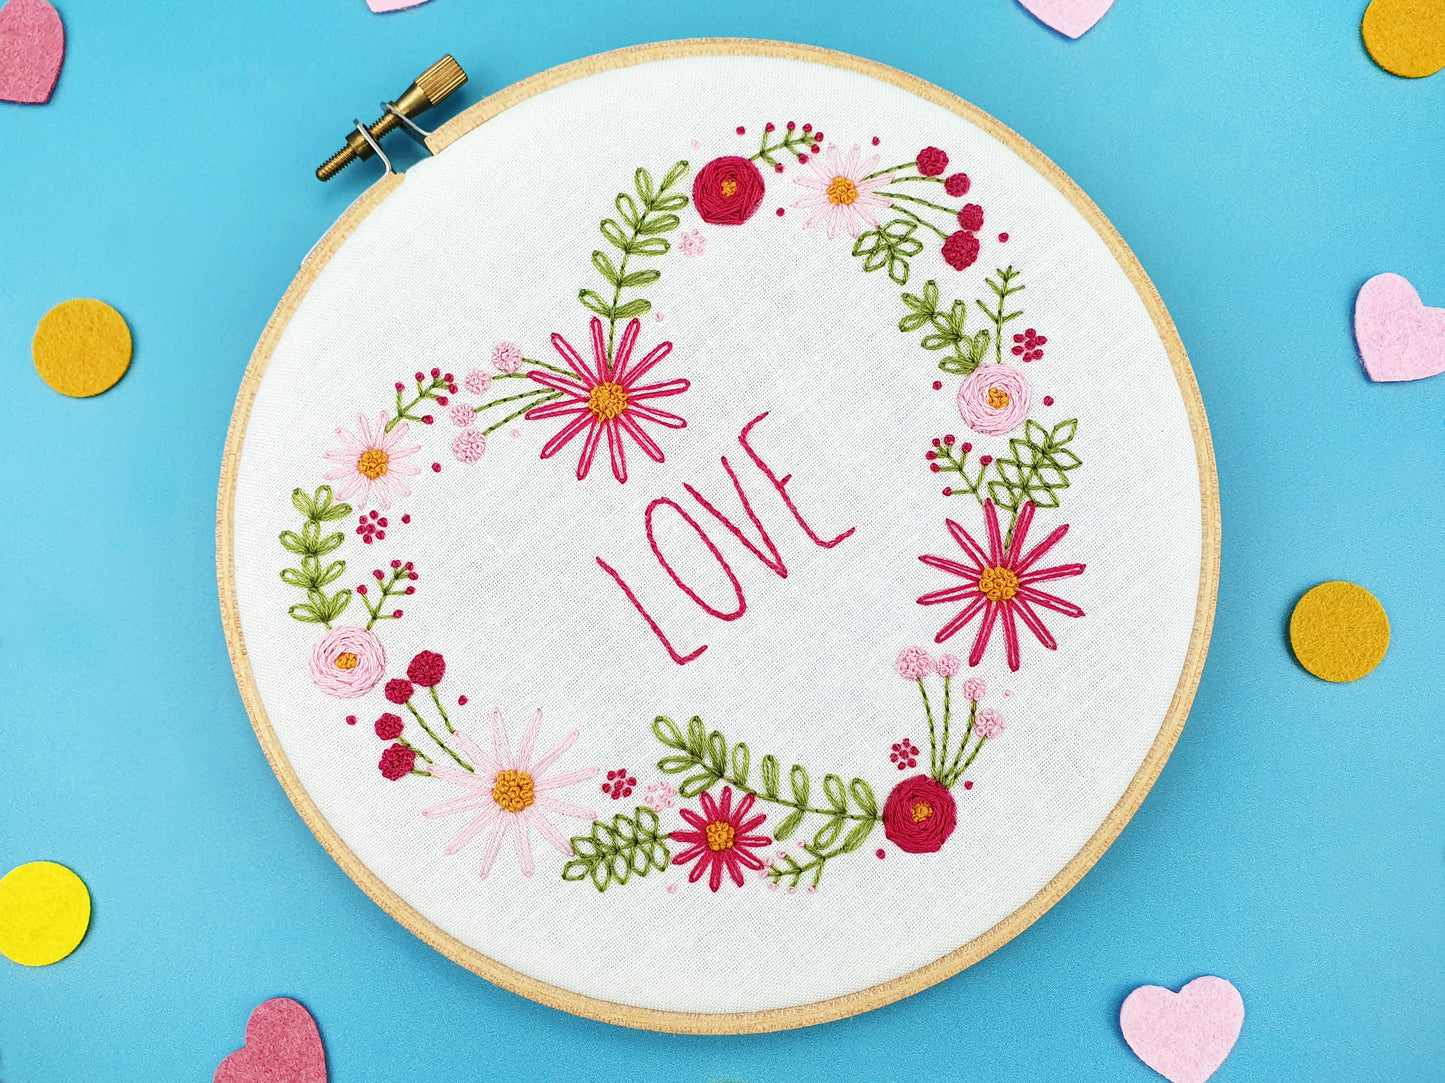 Flower Embroidery Pattern, Pink Love Heart Hoop Art Kit - Fabric Packs - ohsewbootiful